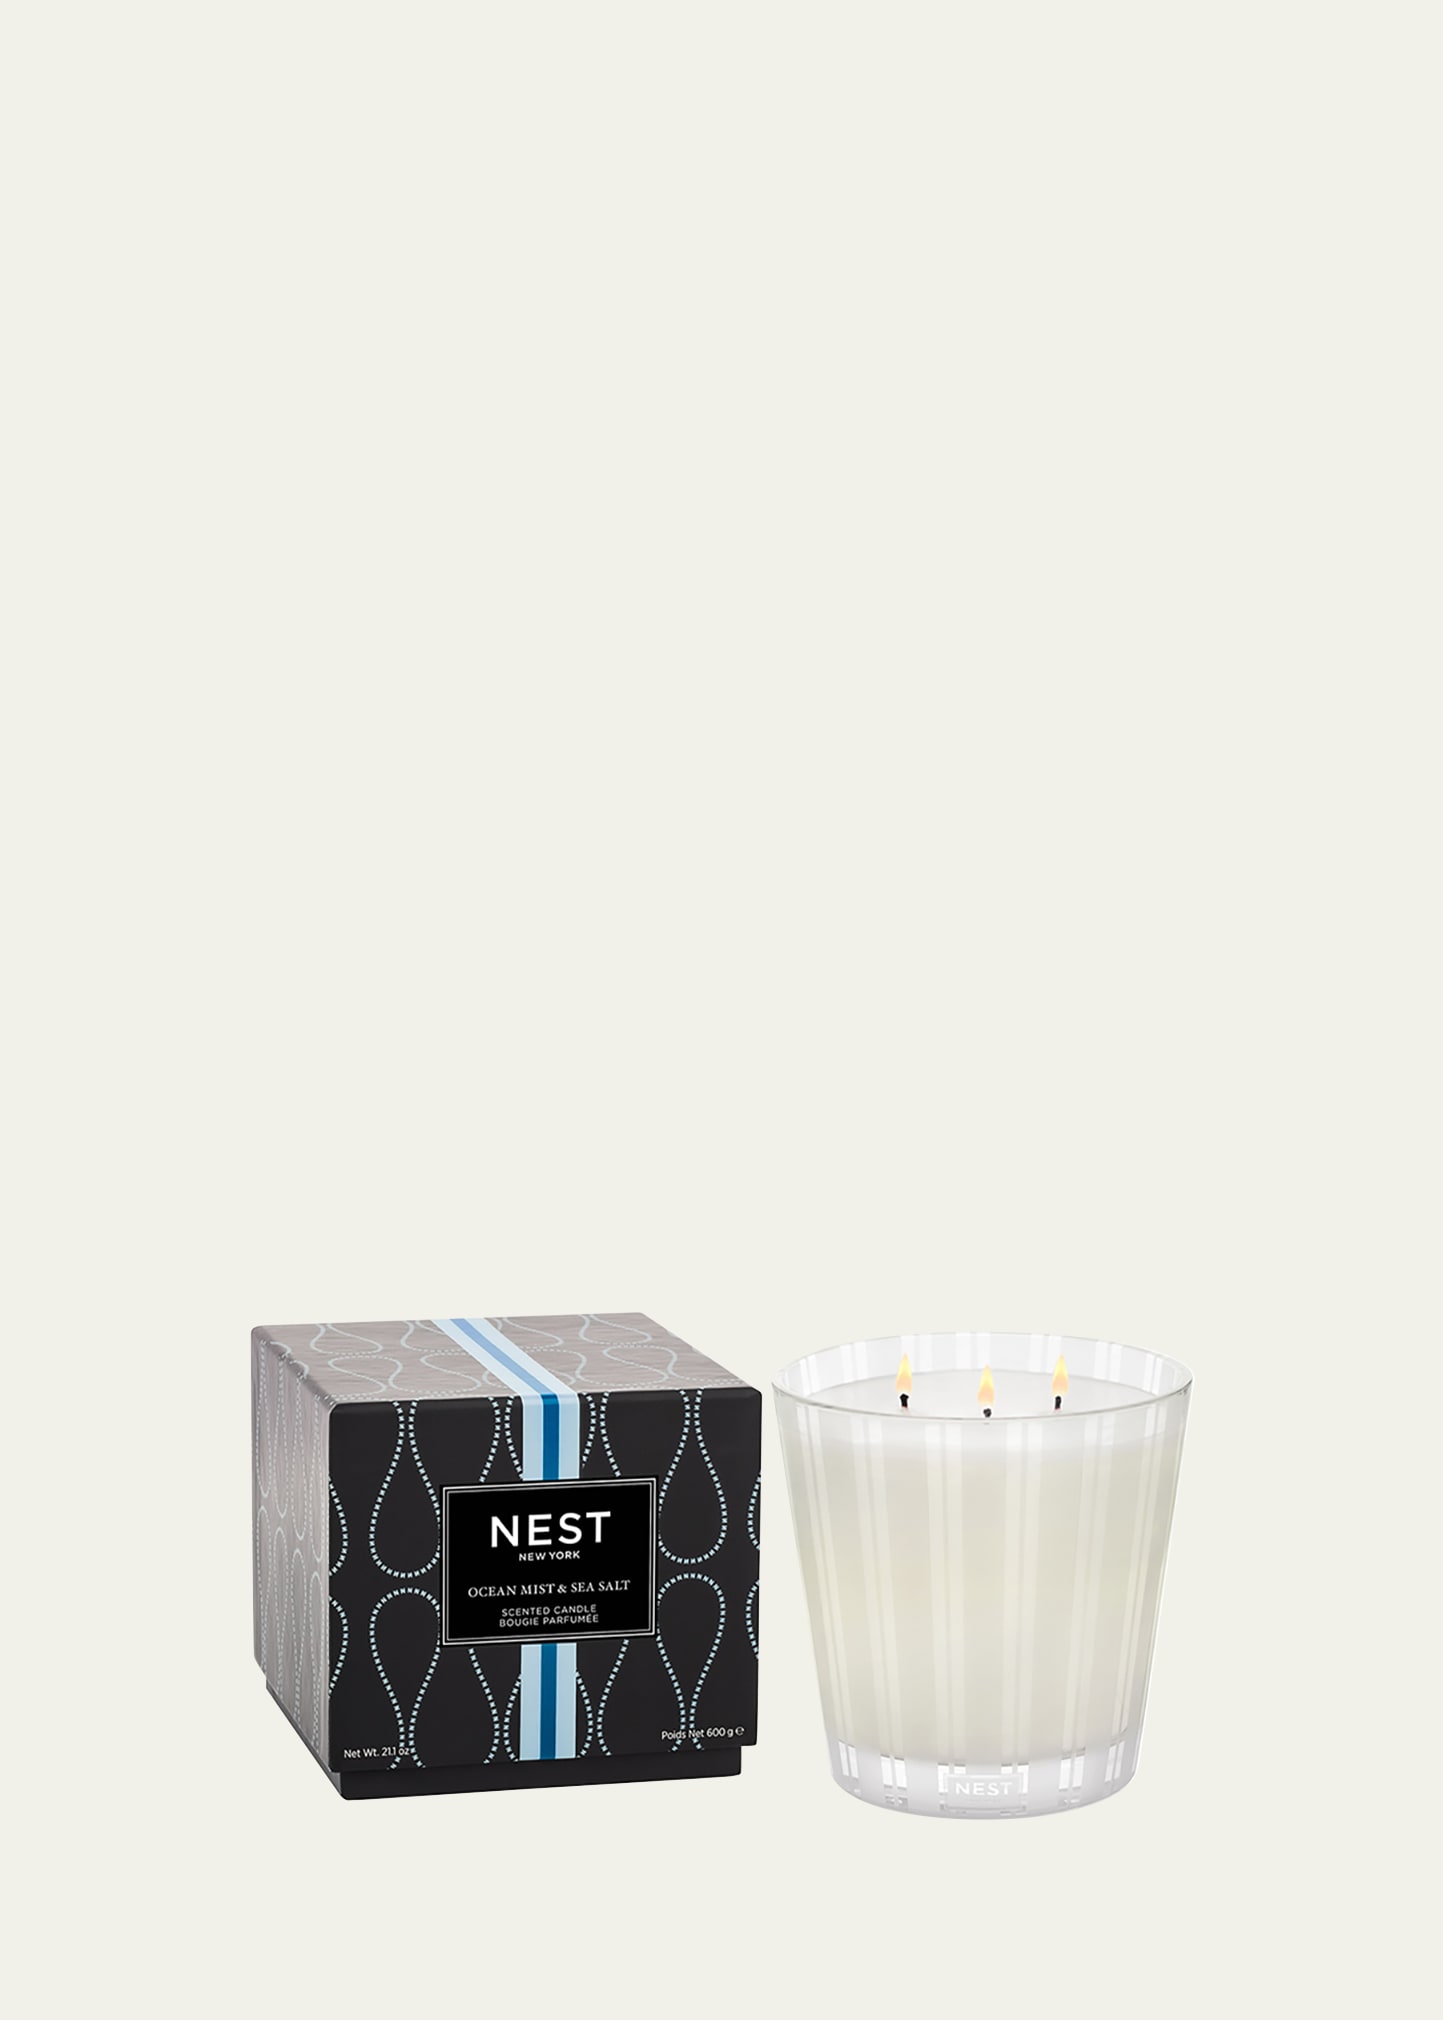 Ocean Mist & Sea Salt 3-Wick Candle, 21.2 oz.